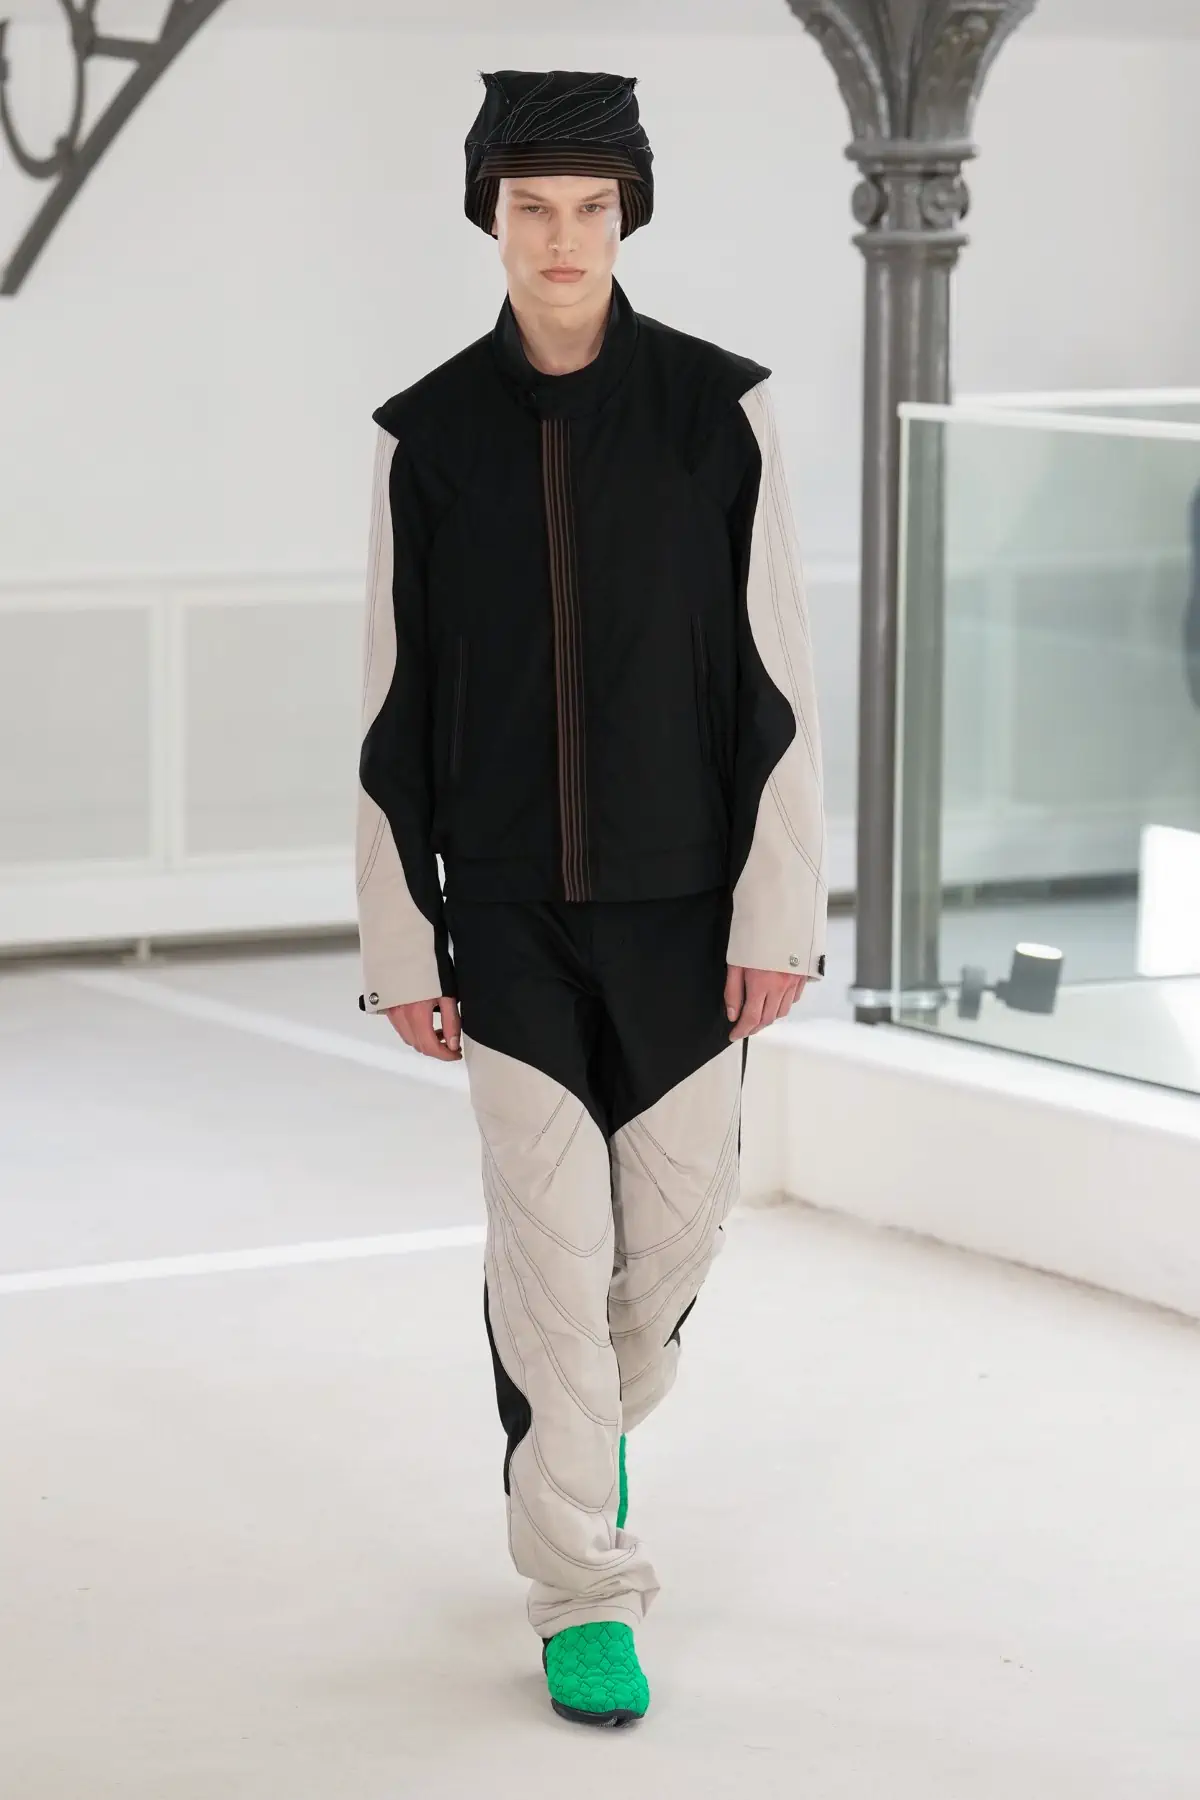 KIKO KOSTADINOV's Spring 2025 collection explores the intersection of health and fashion